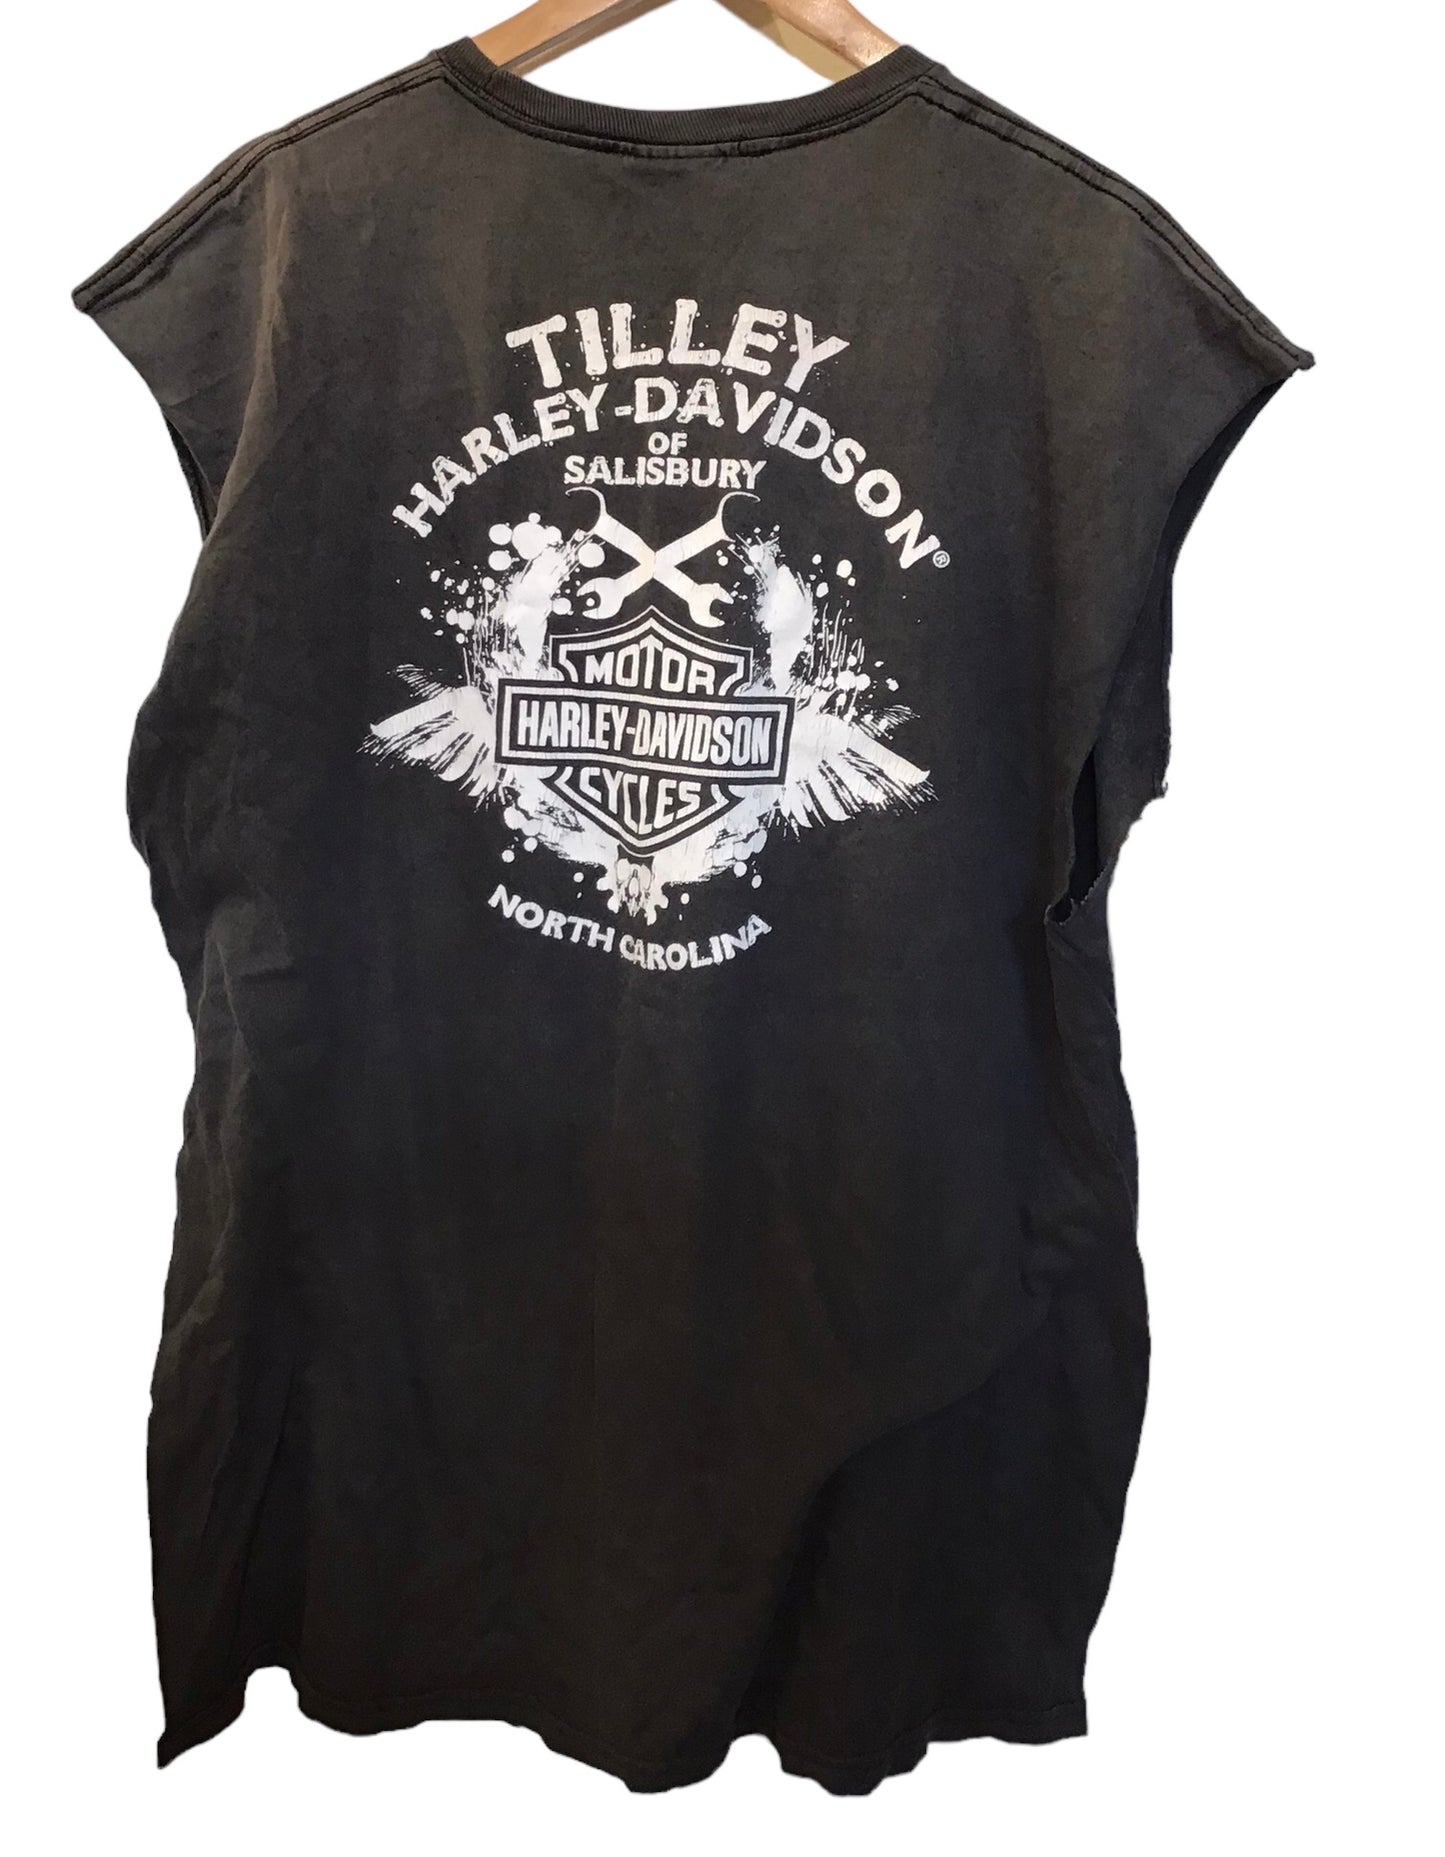 Harley Davidson sleeveless T-shirt (size XL)